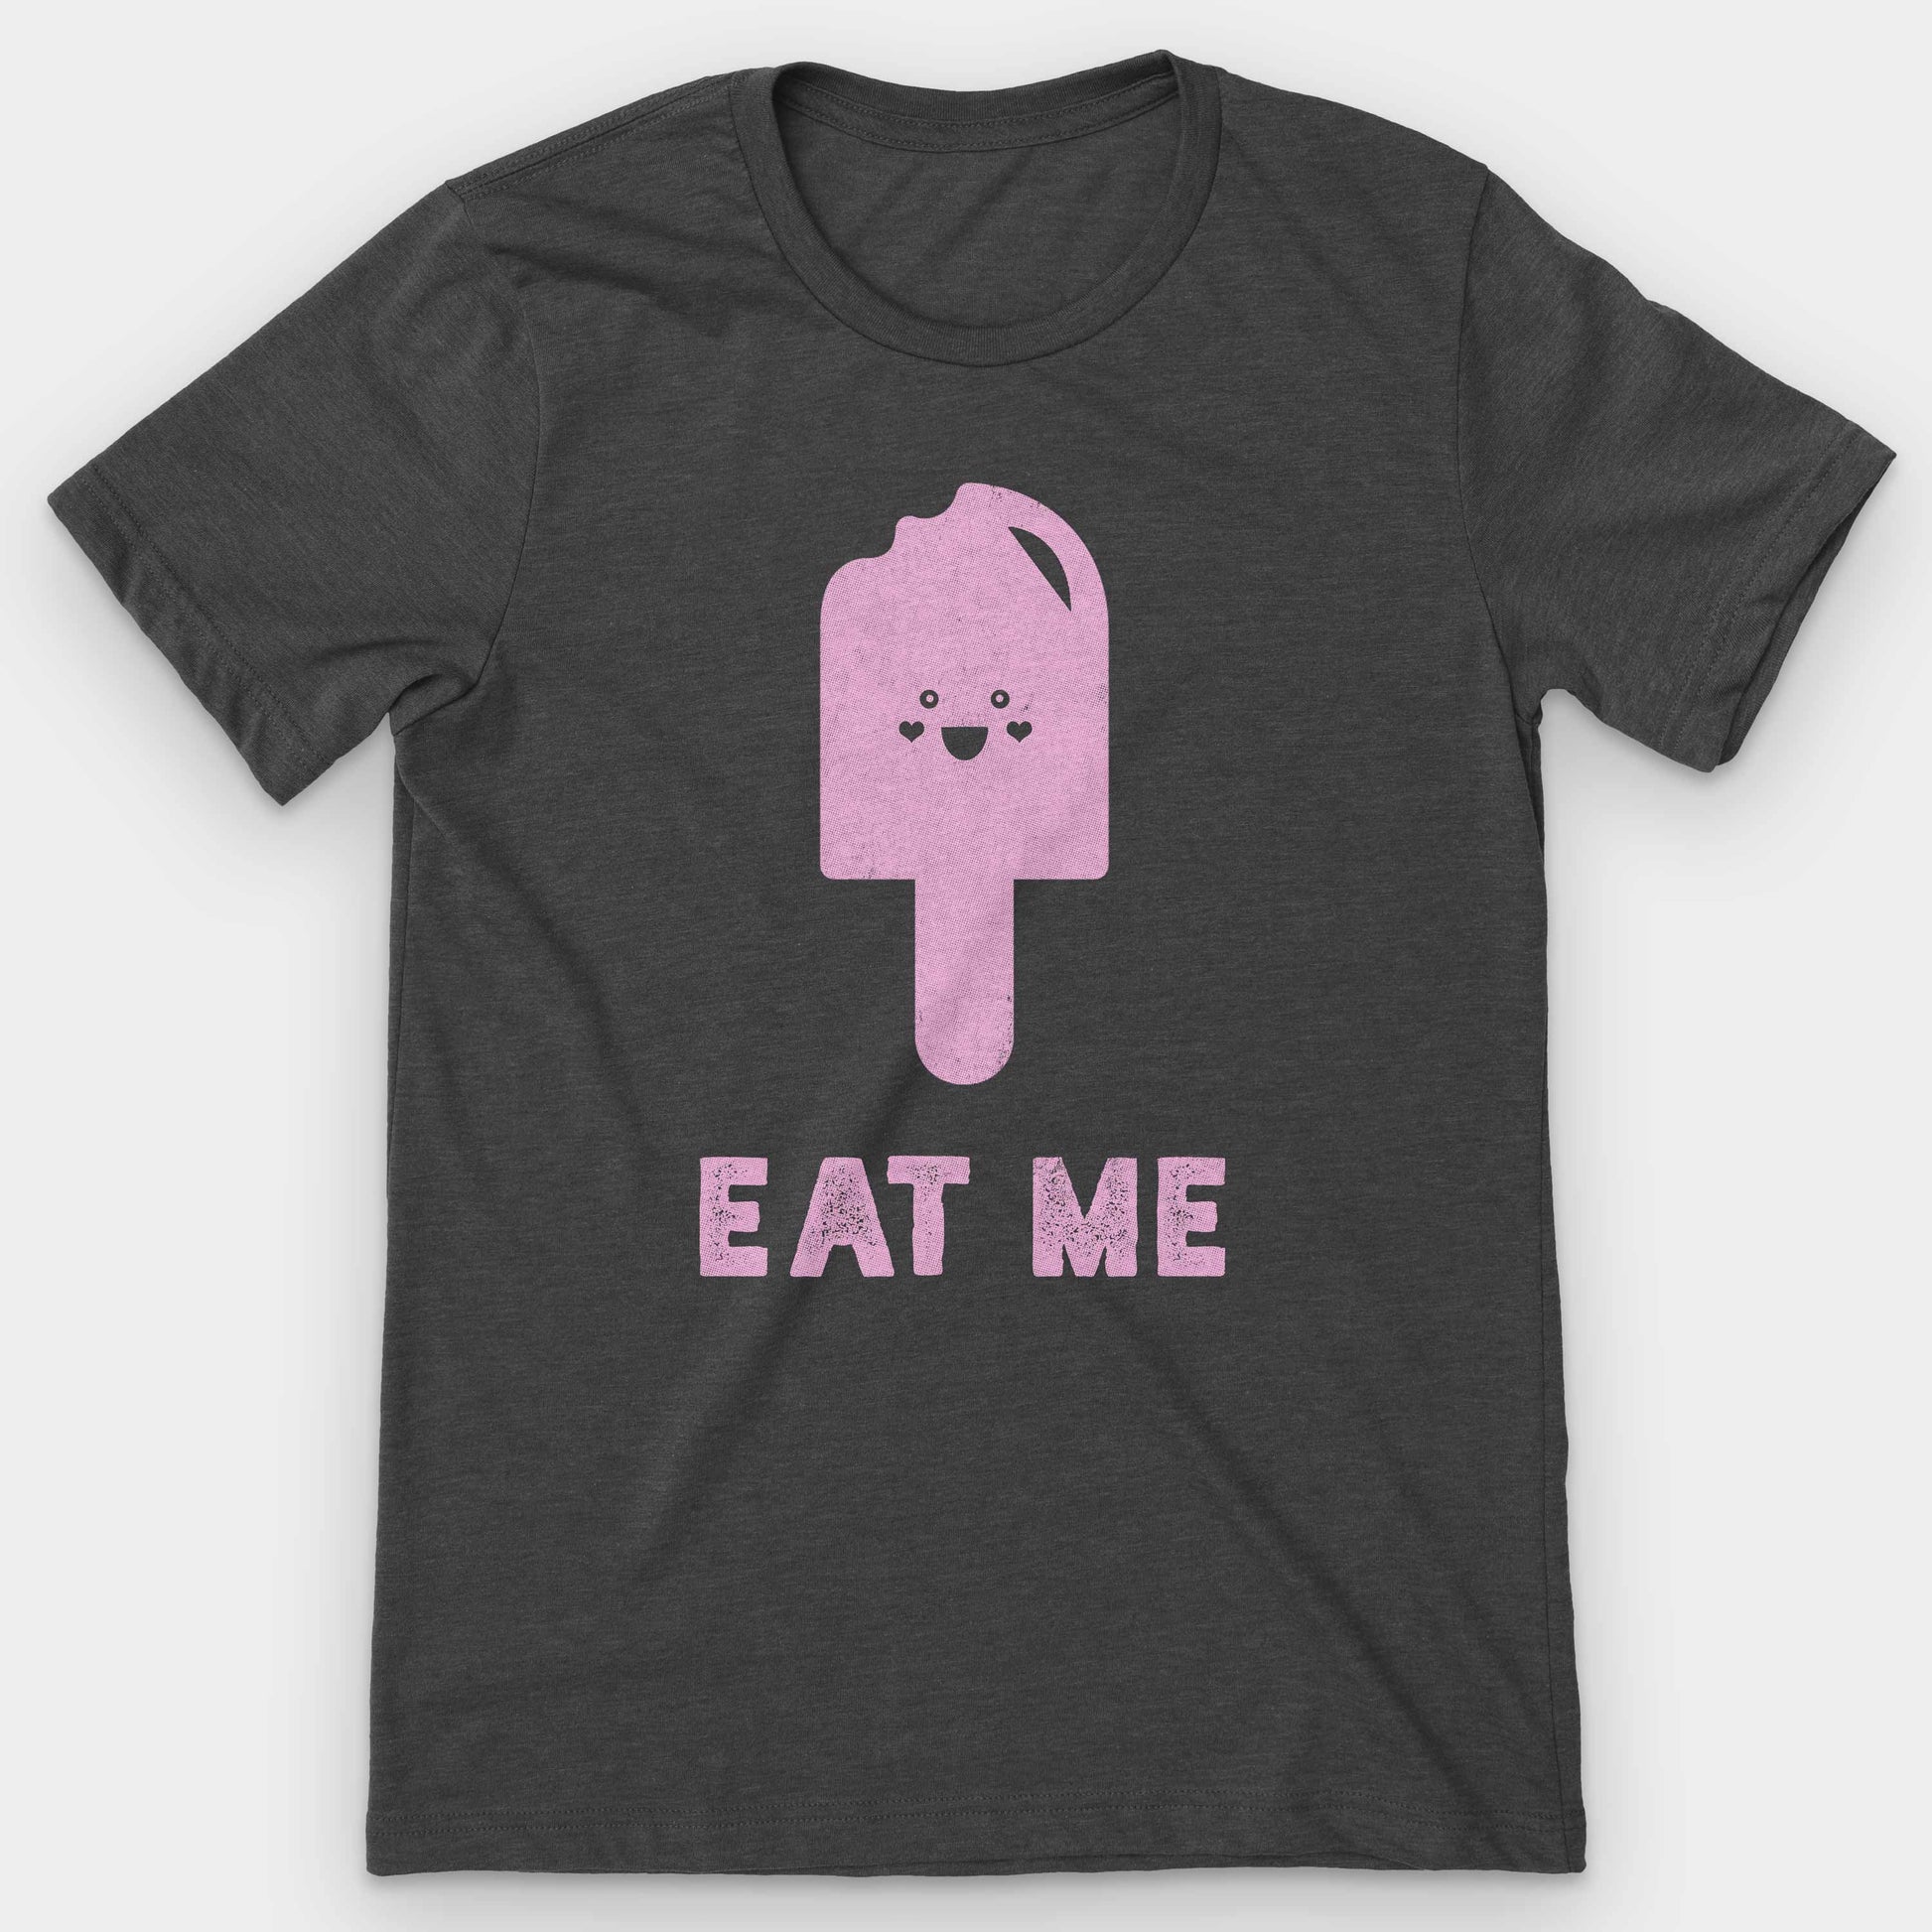 Dark Grey Heather Eat Me Graphic T-Shirt by Snaxtime